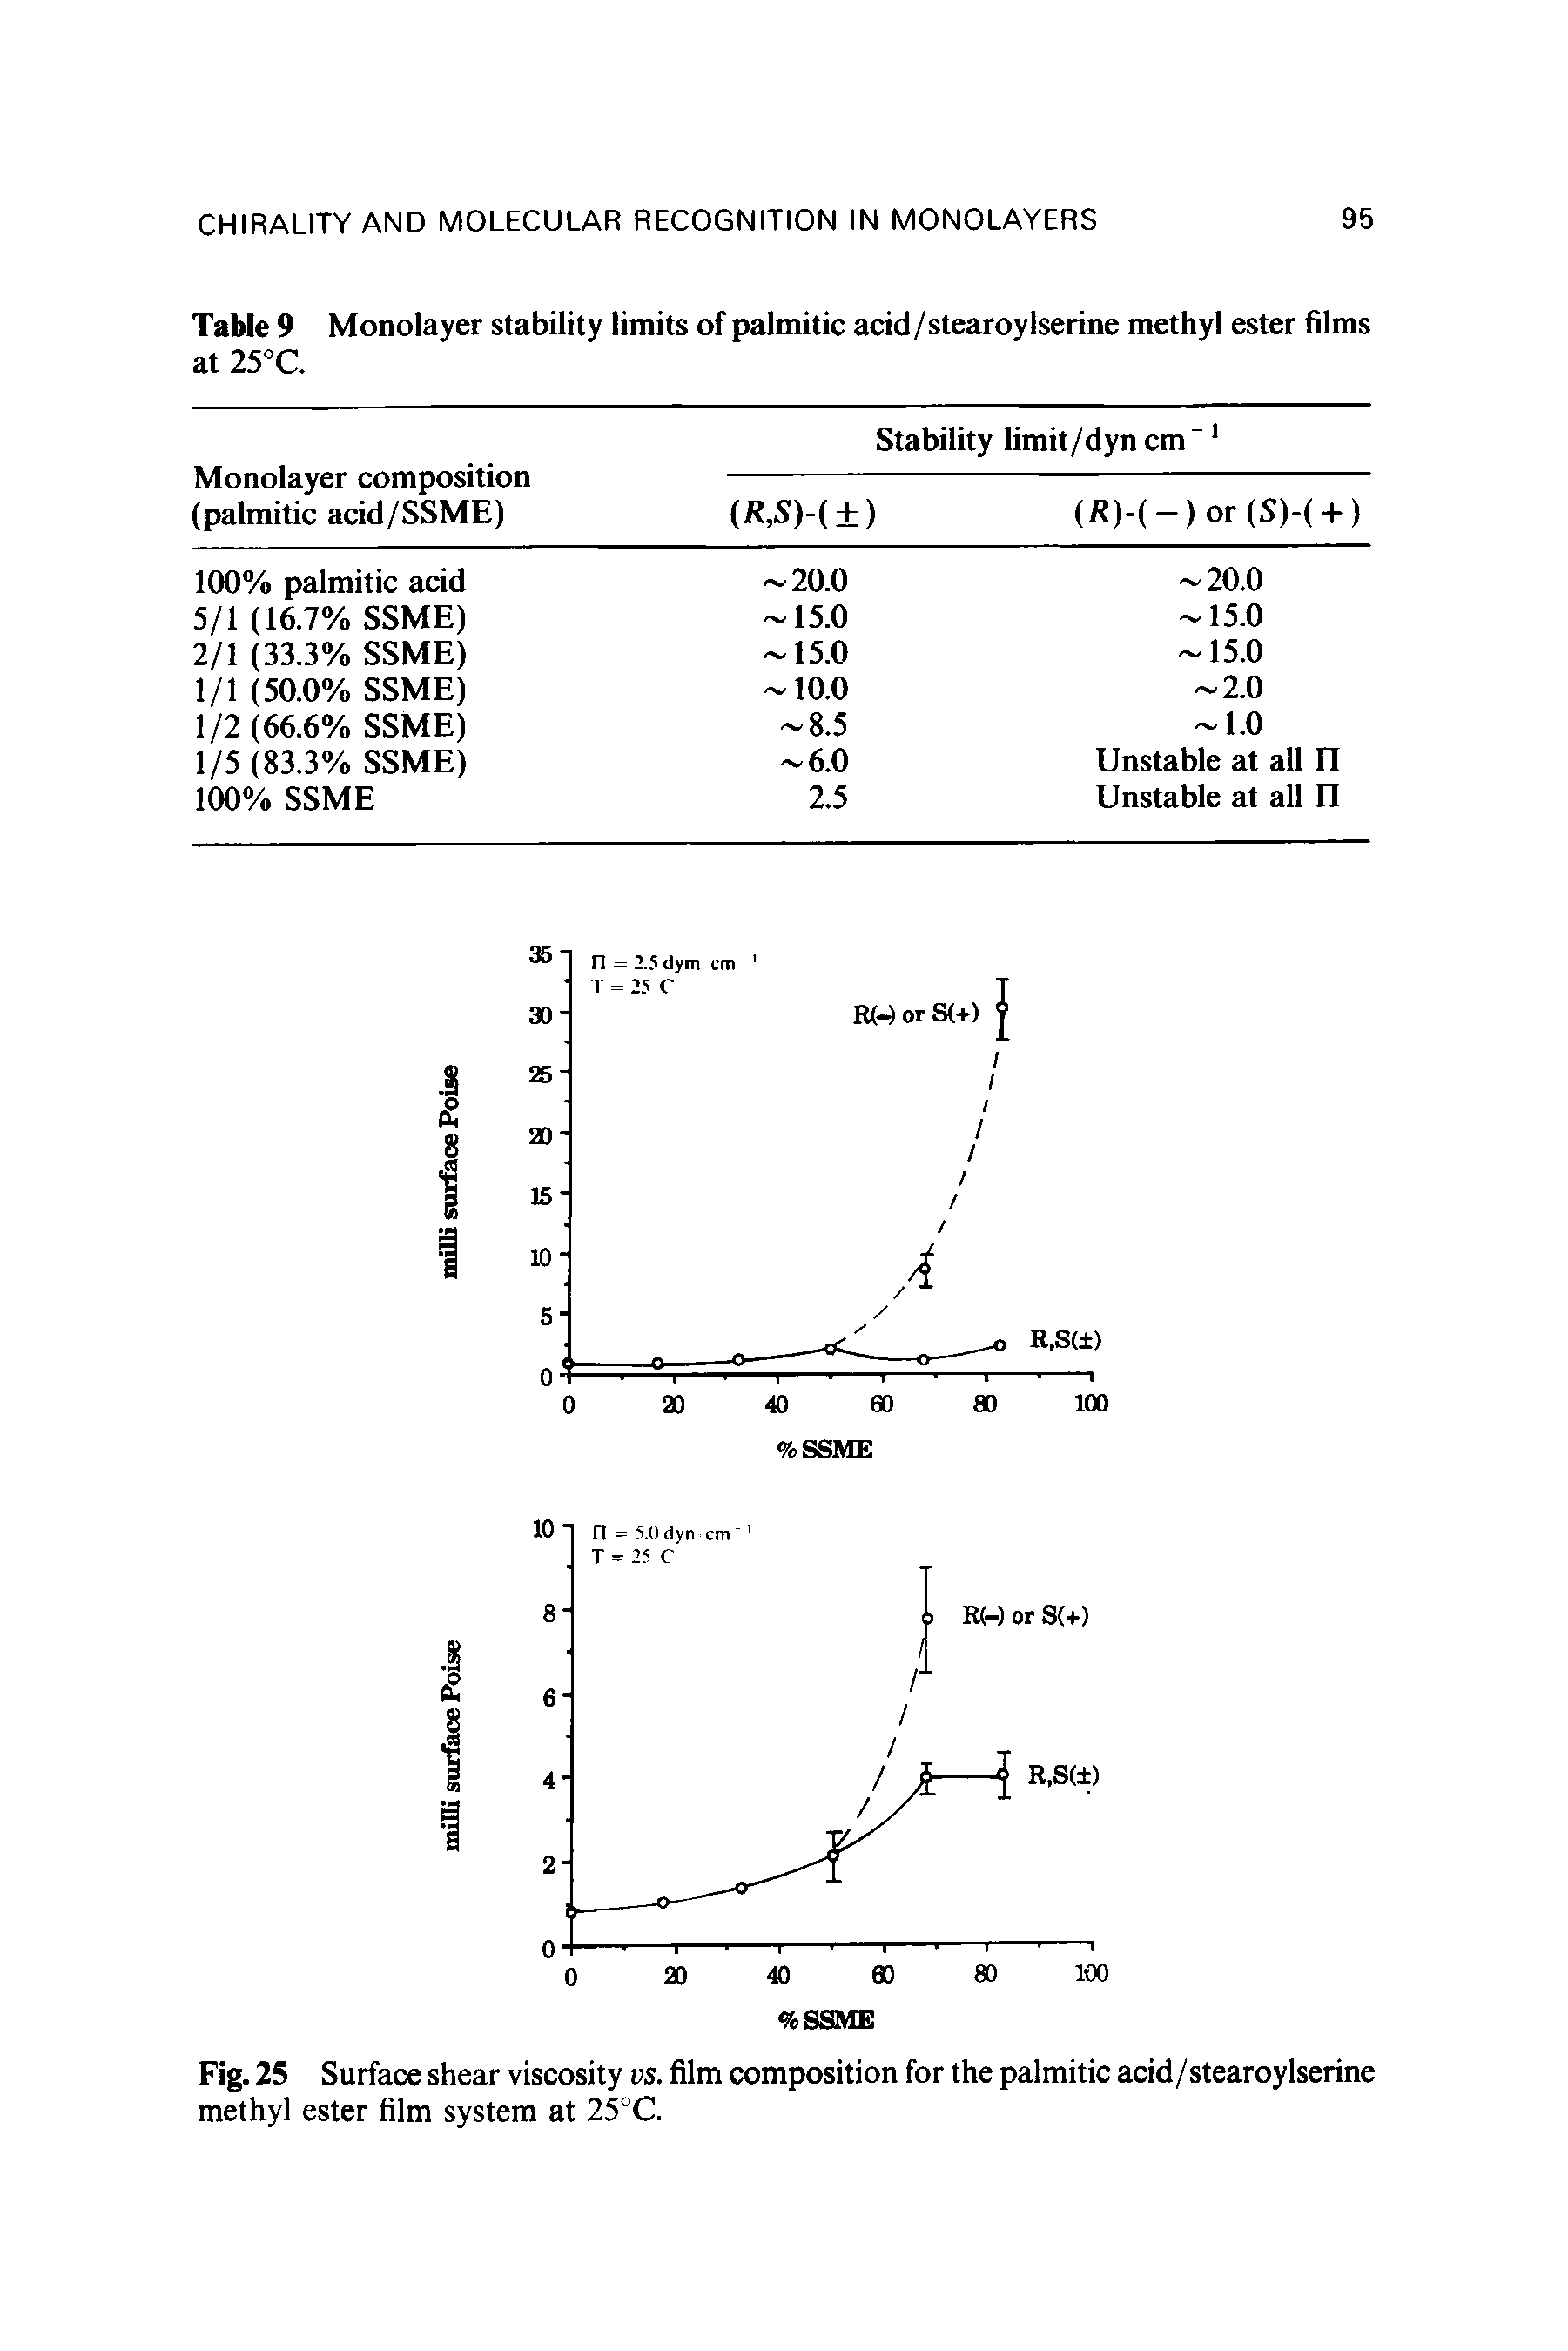 Fig. 25 Surface shear viscosity vs. film composition for the palmitic acid/stearoylserine methyl ester film system at 25°C.